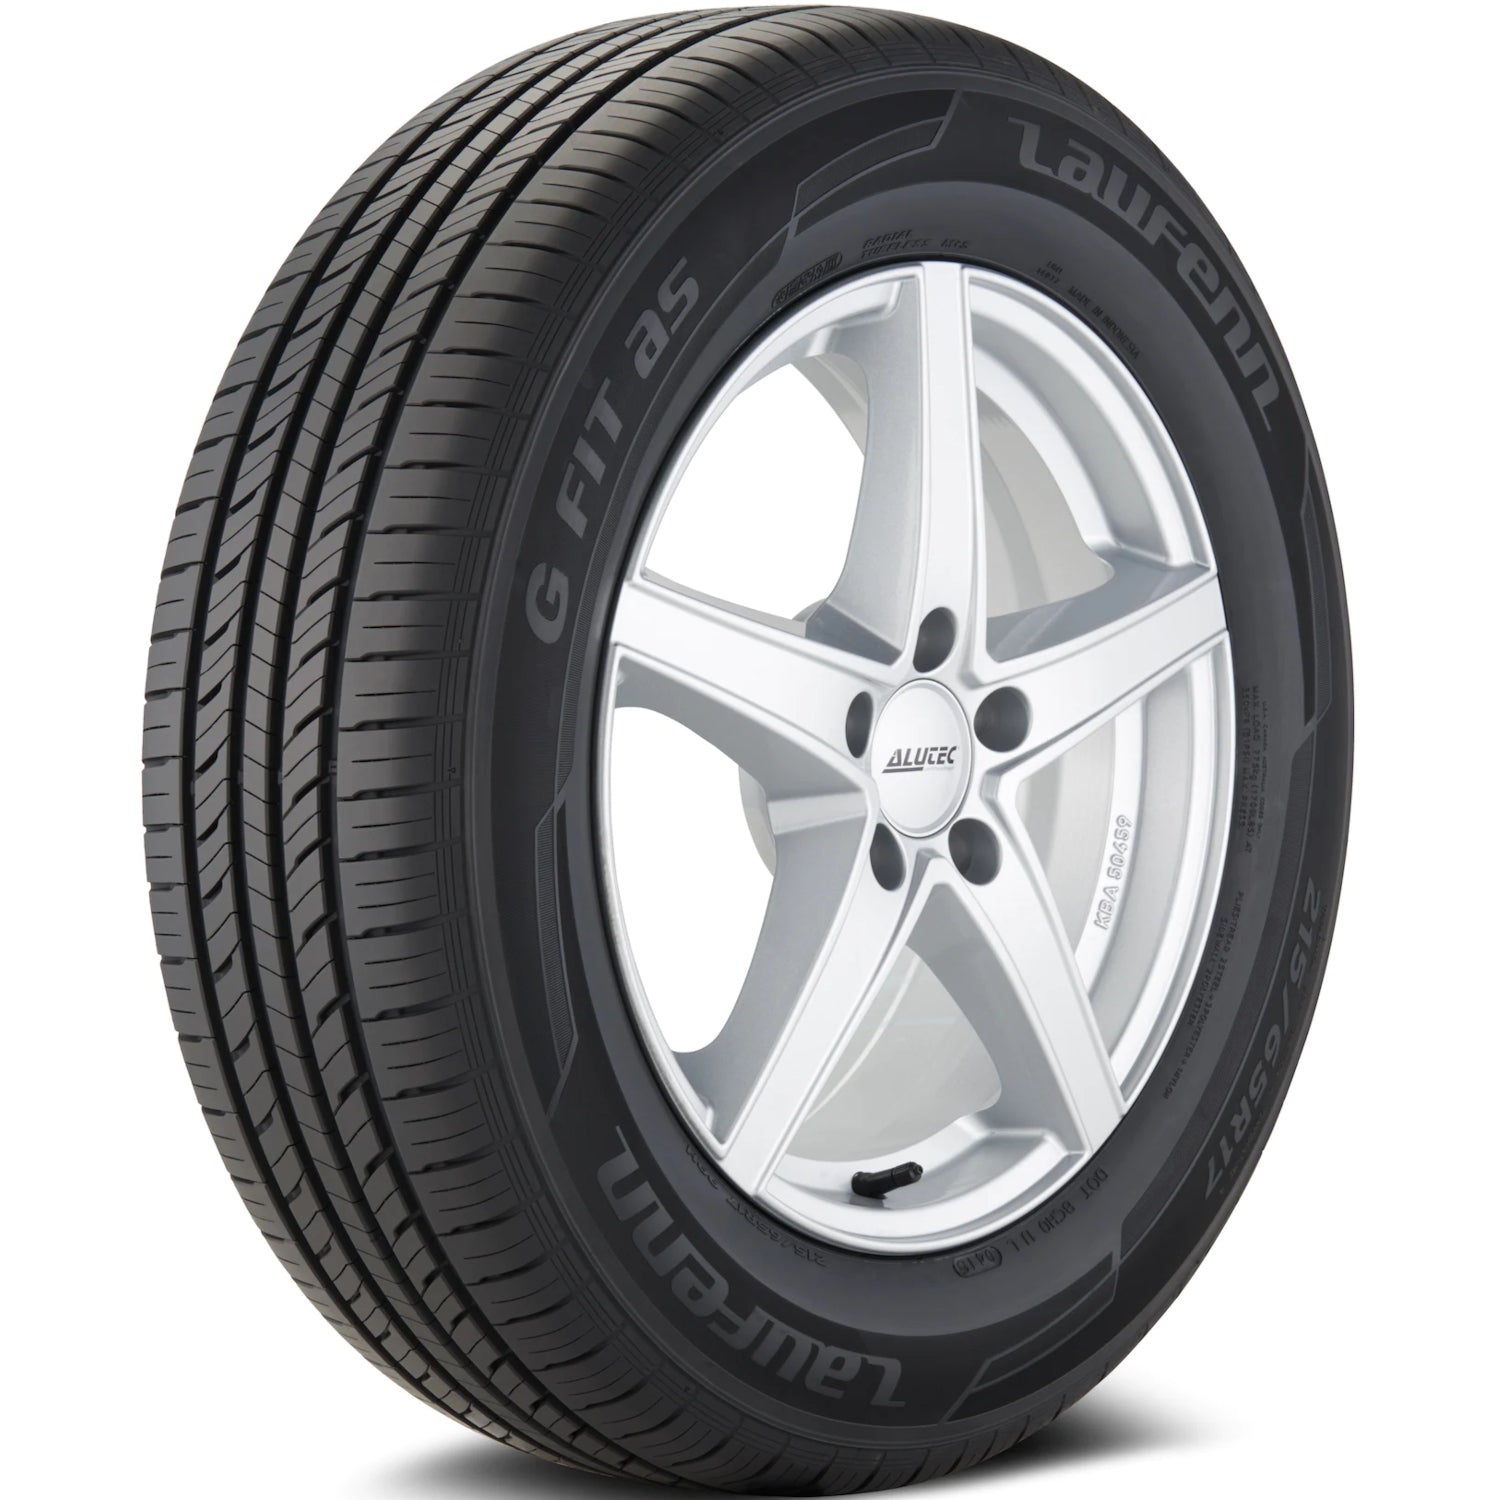 LAUFENN G FIT AS 205/65R15 (25.5X8.1R 15) Tires